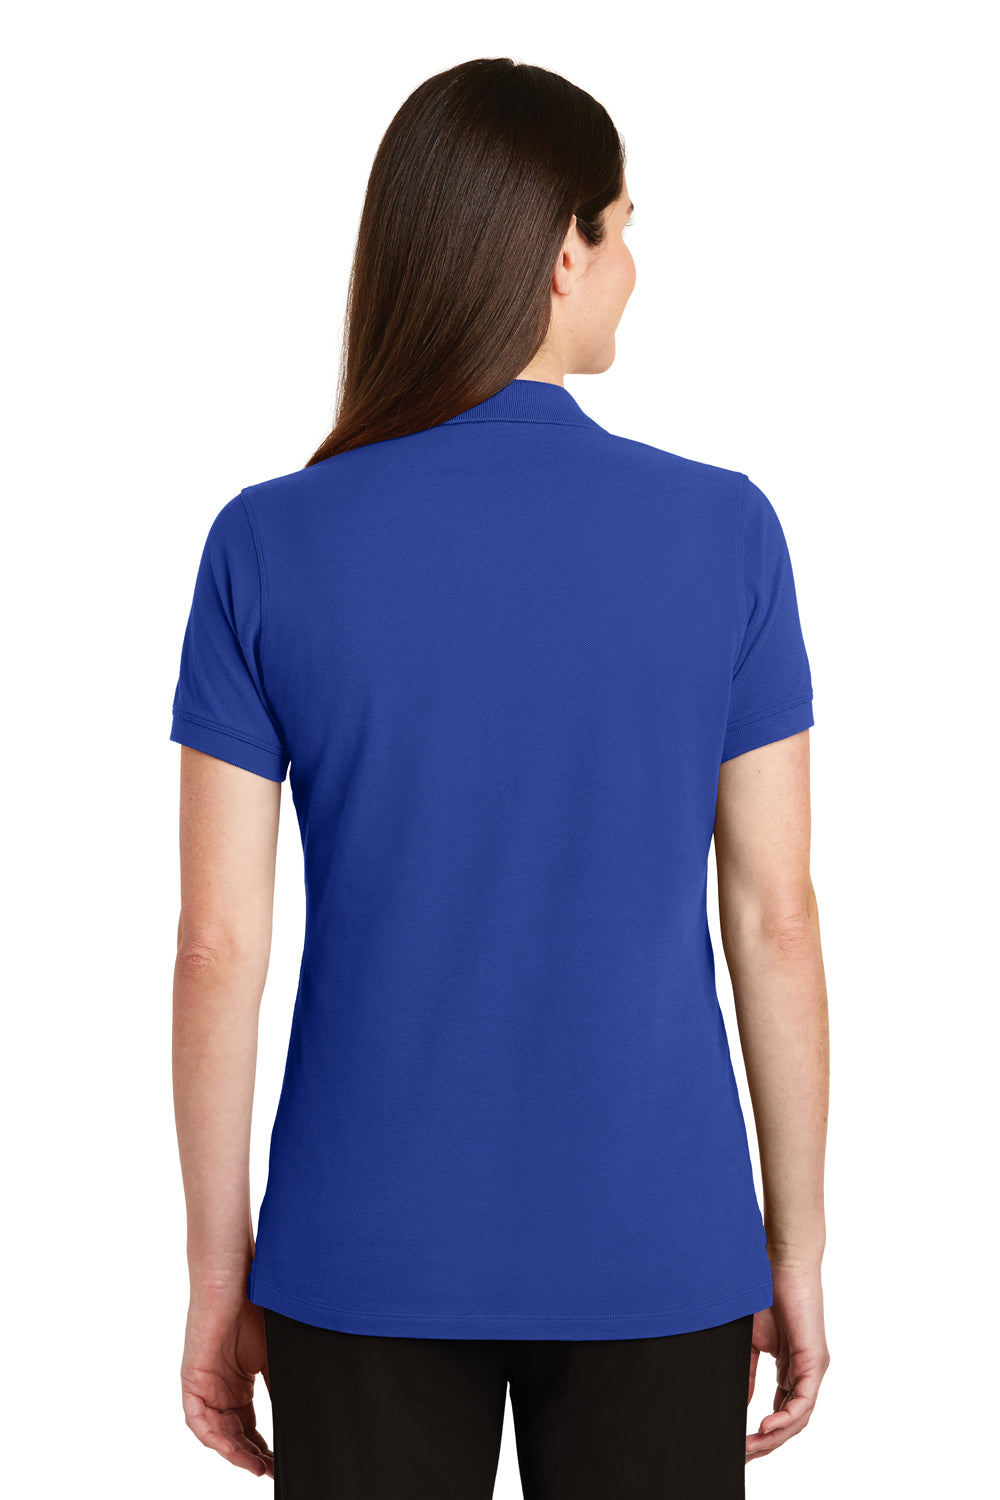 Port Authority LK8000 Womens Wrinkle Resistant Short Sleeve Polo Shirt Royal Blue Back